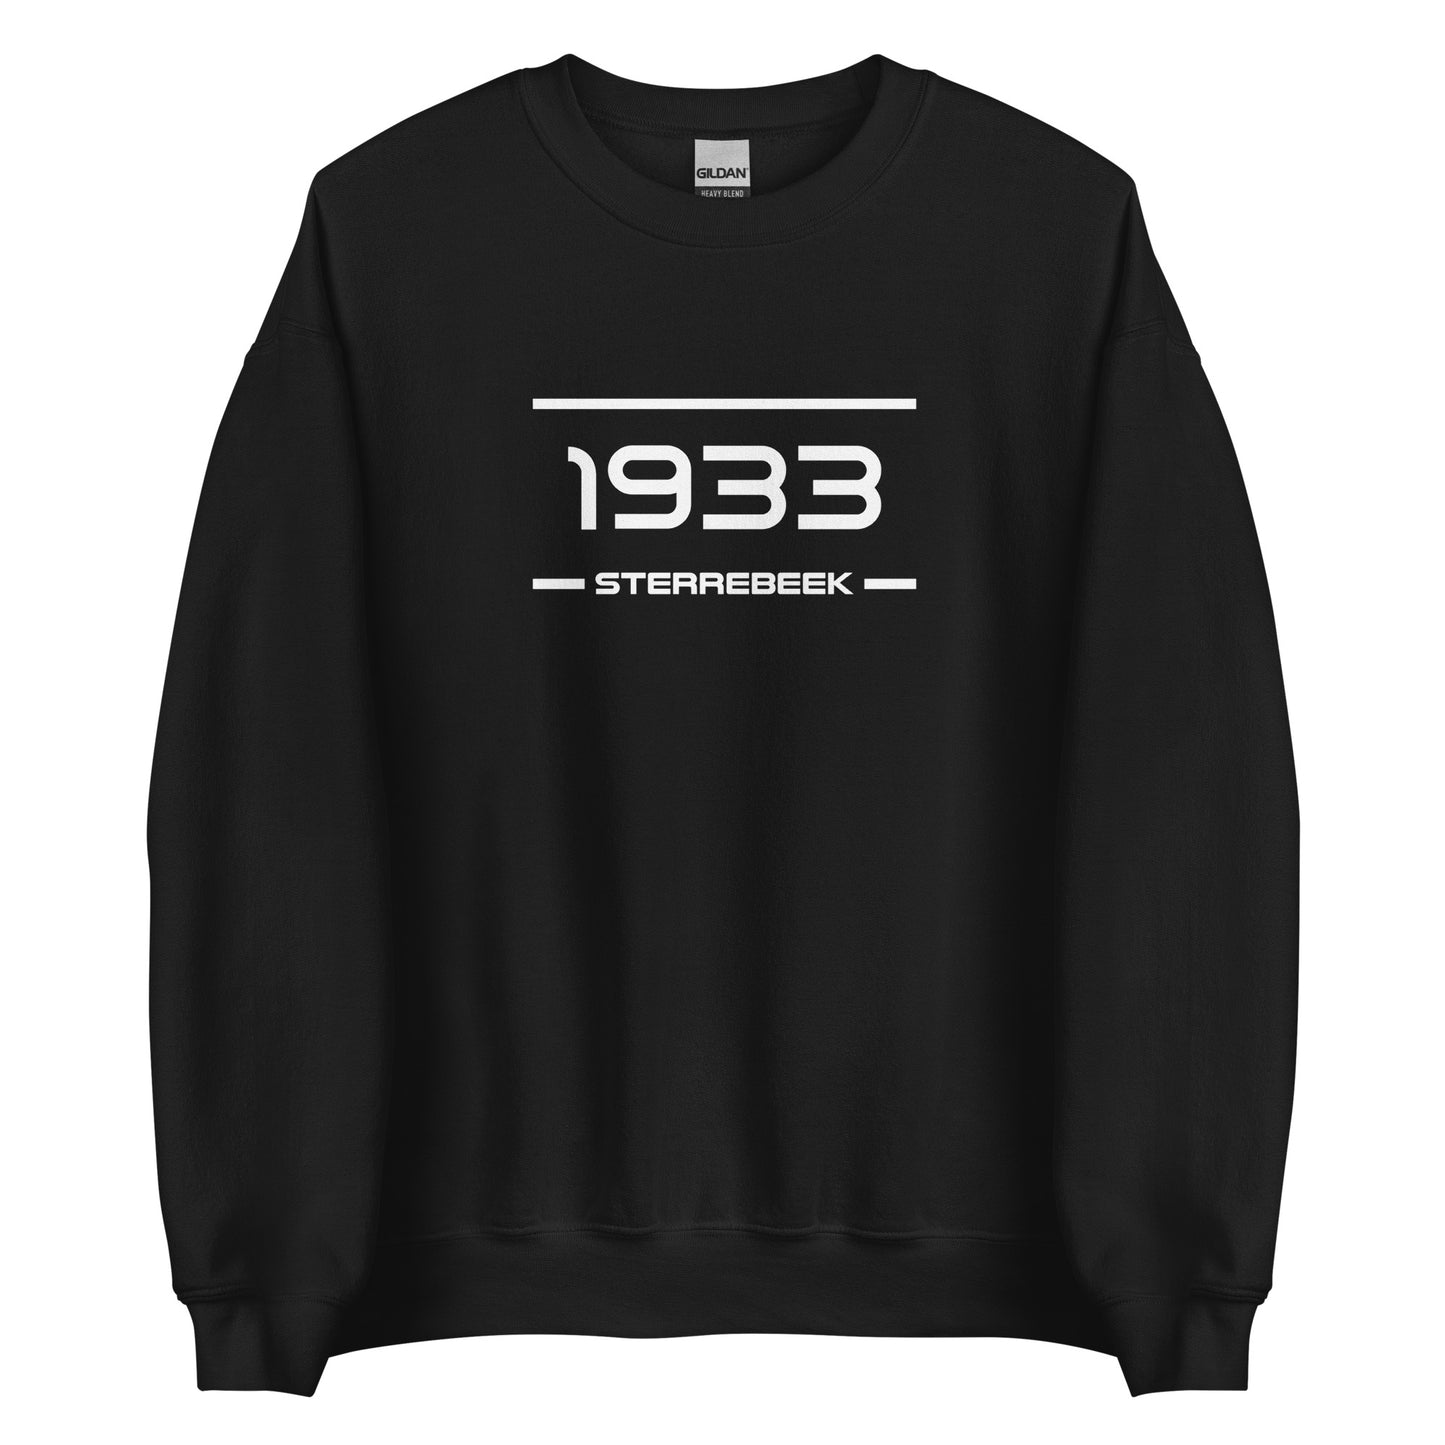 Sweater - 1933 - Sterrebeek (M/V)